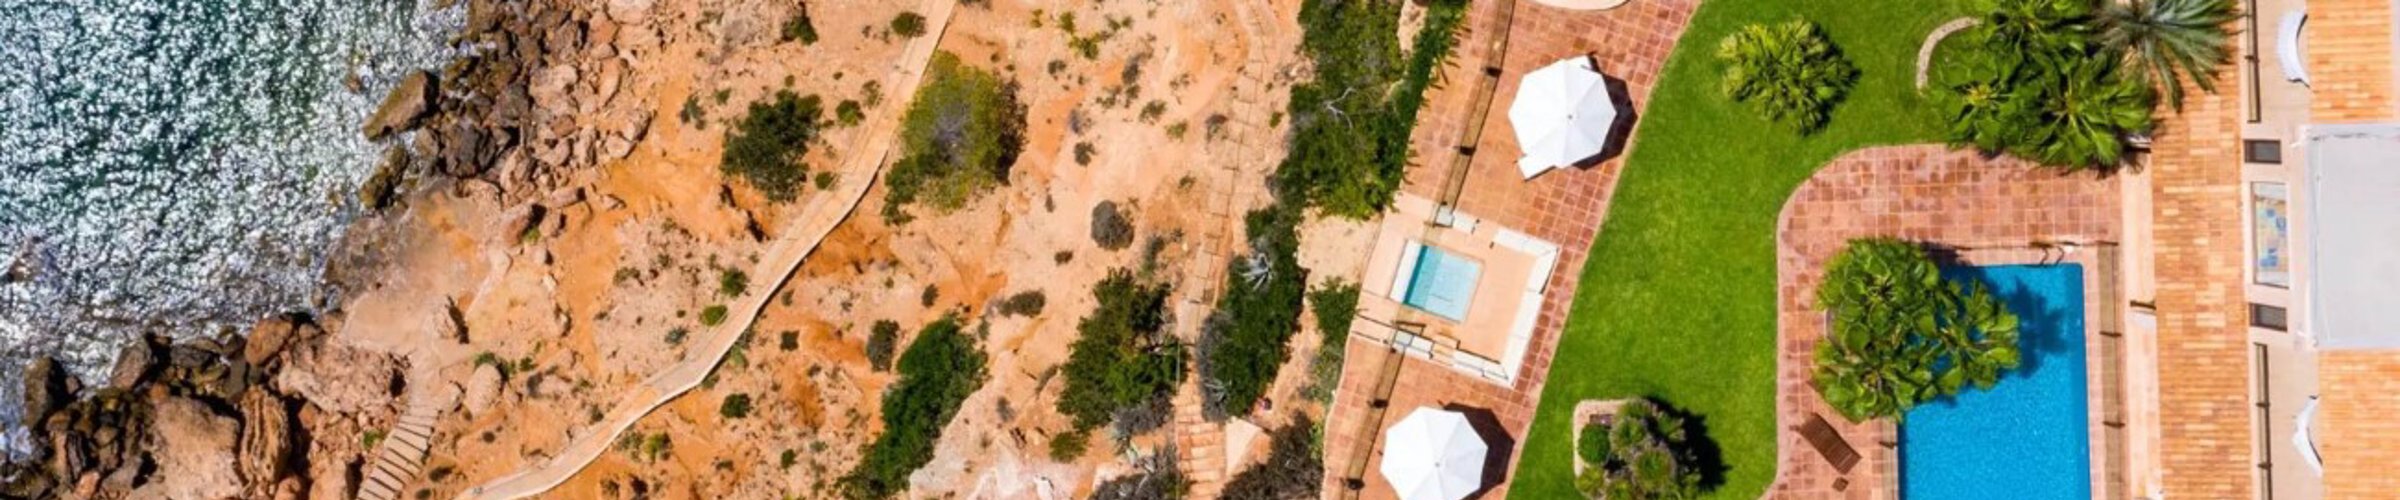 Ibiza, Hotels vs Luxury Villas